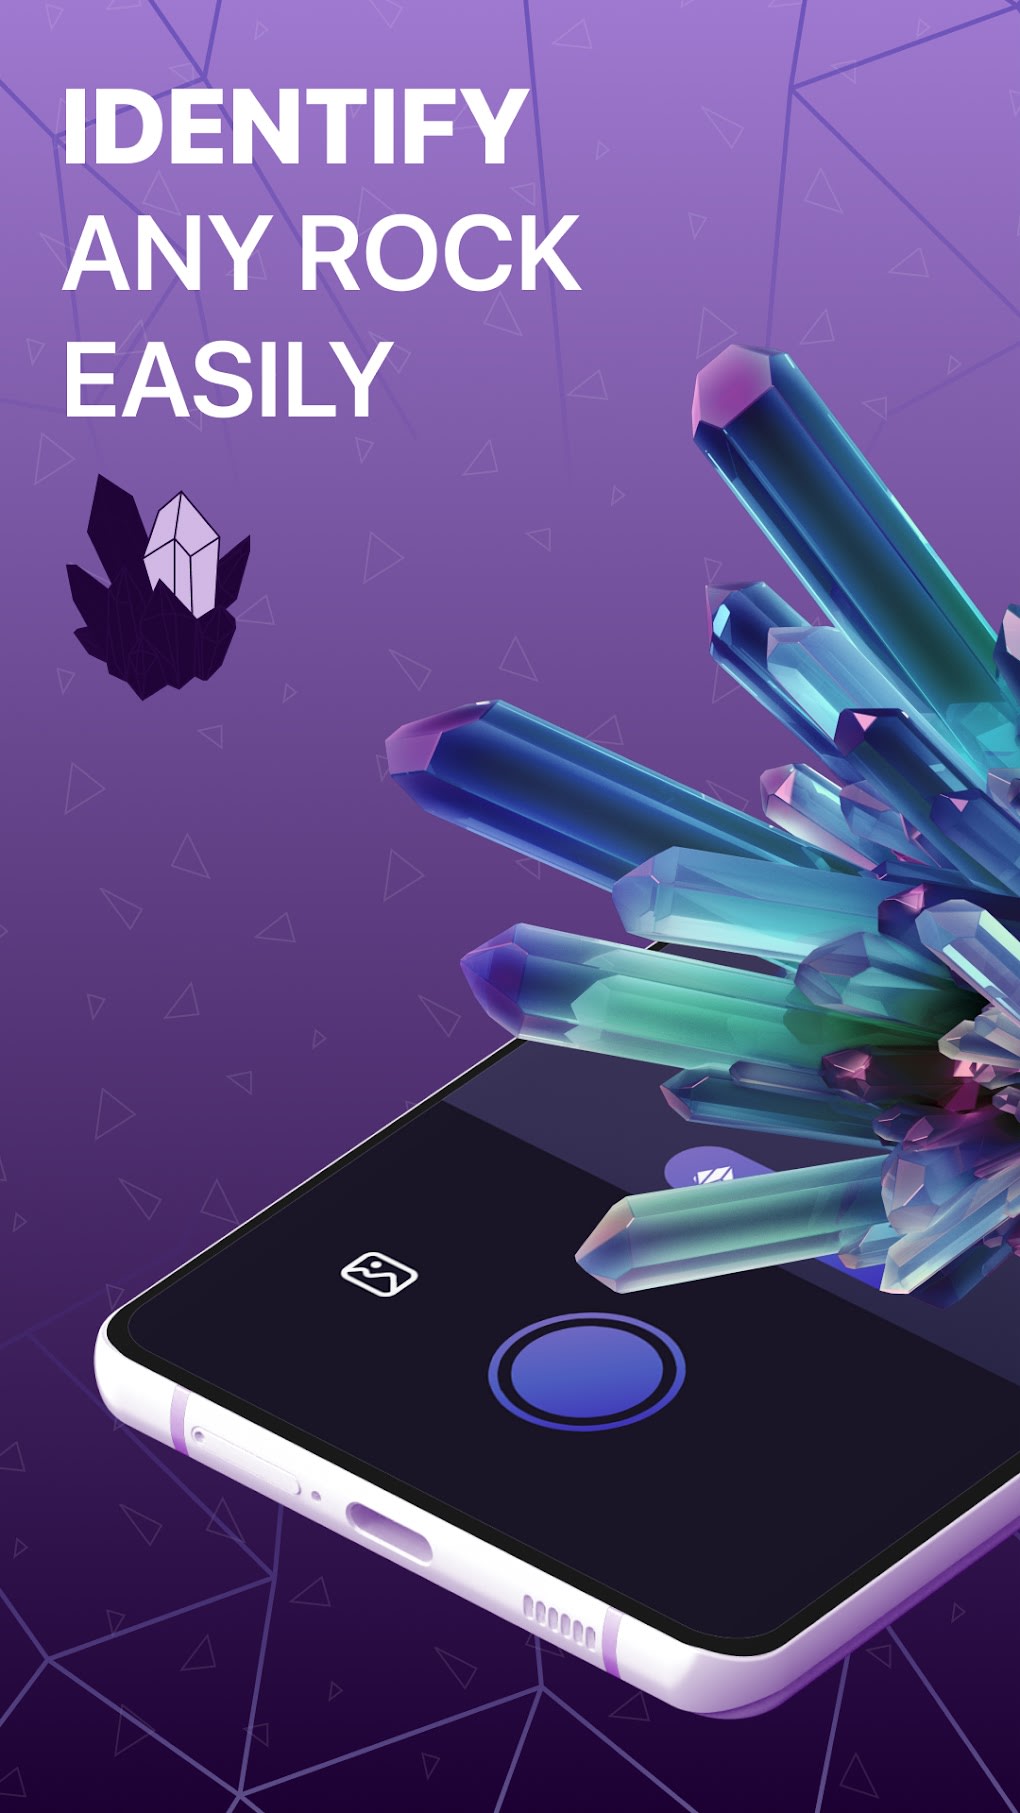 Gemius: Rock Identifier - Stone Crystal Gem ID para Android - Download